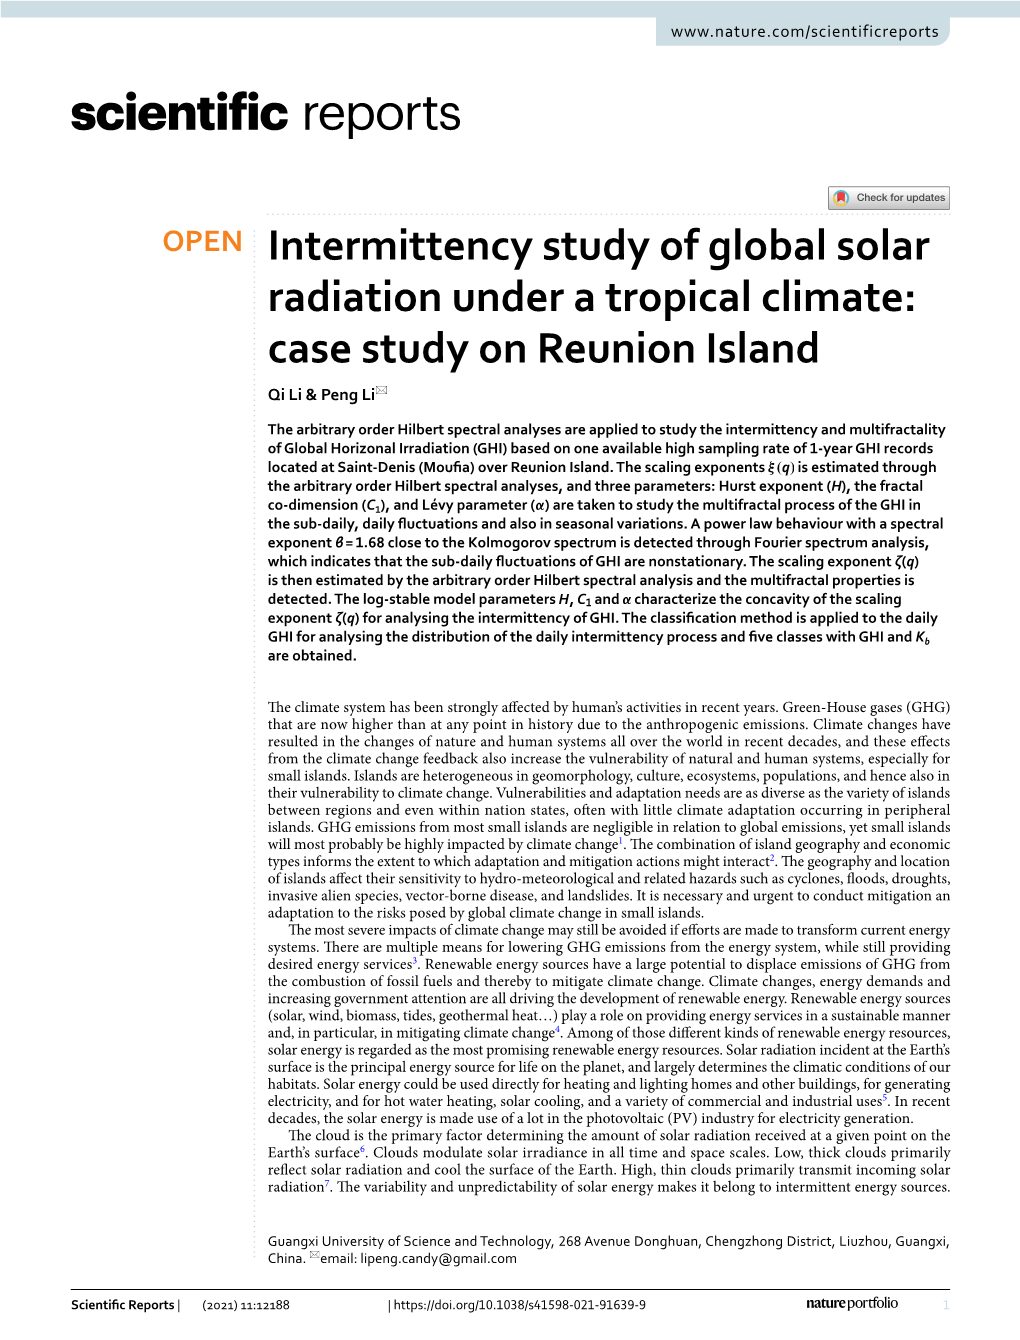 Intermittency Study of Global Solar Radiation Under a Tropical Climate: Case Study on Reunion Island Qi Li & Peng Li*